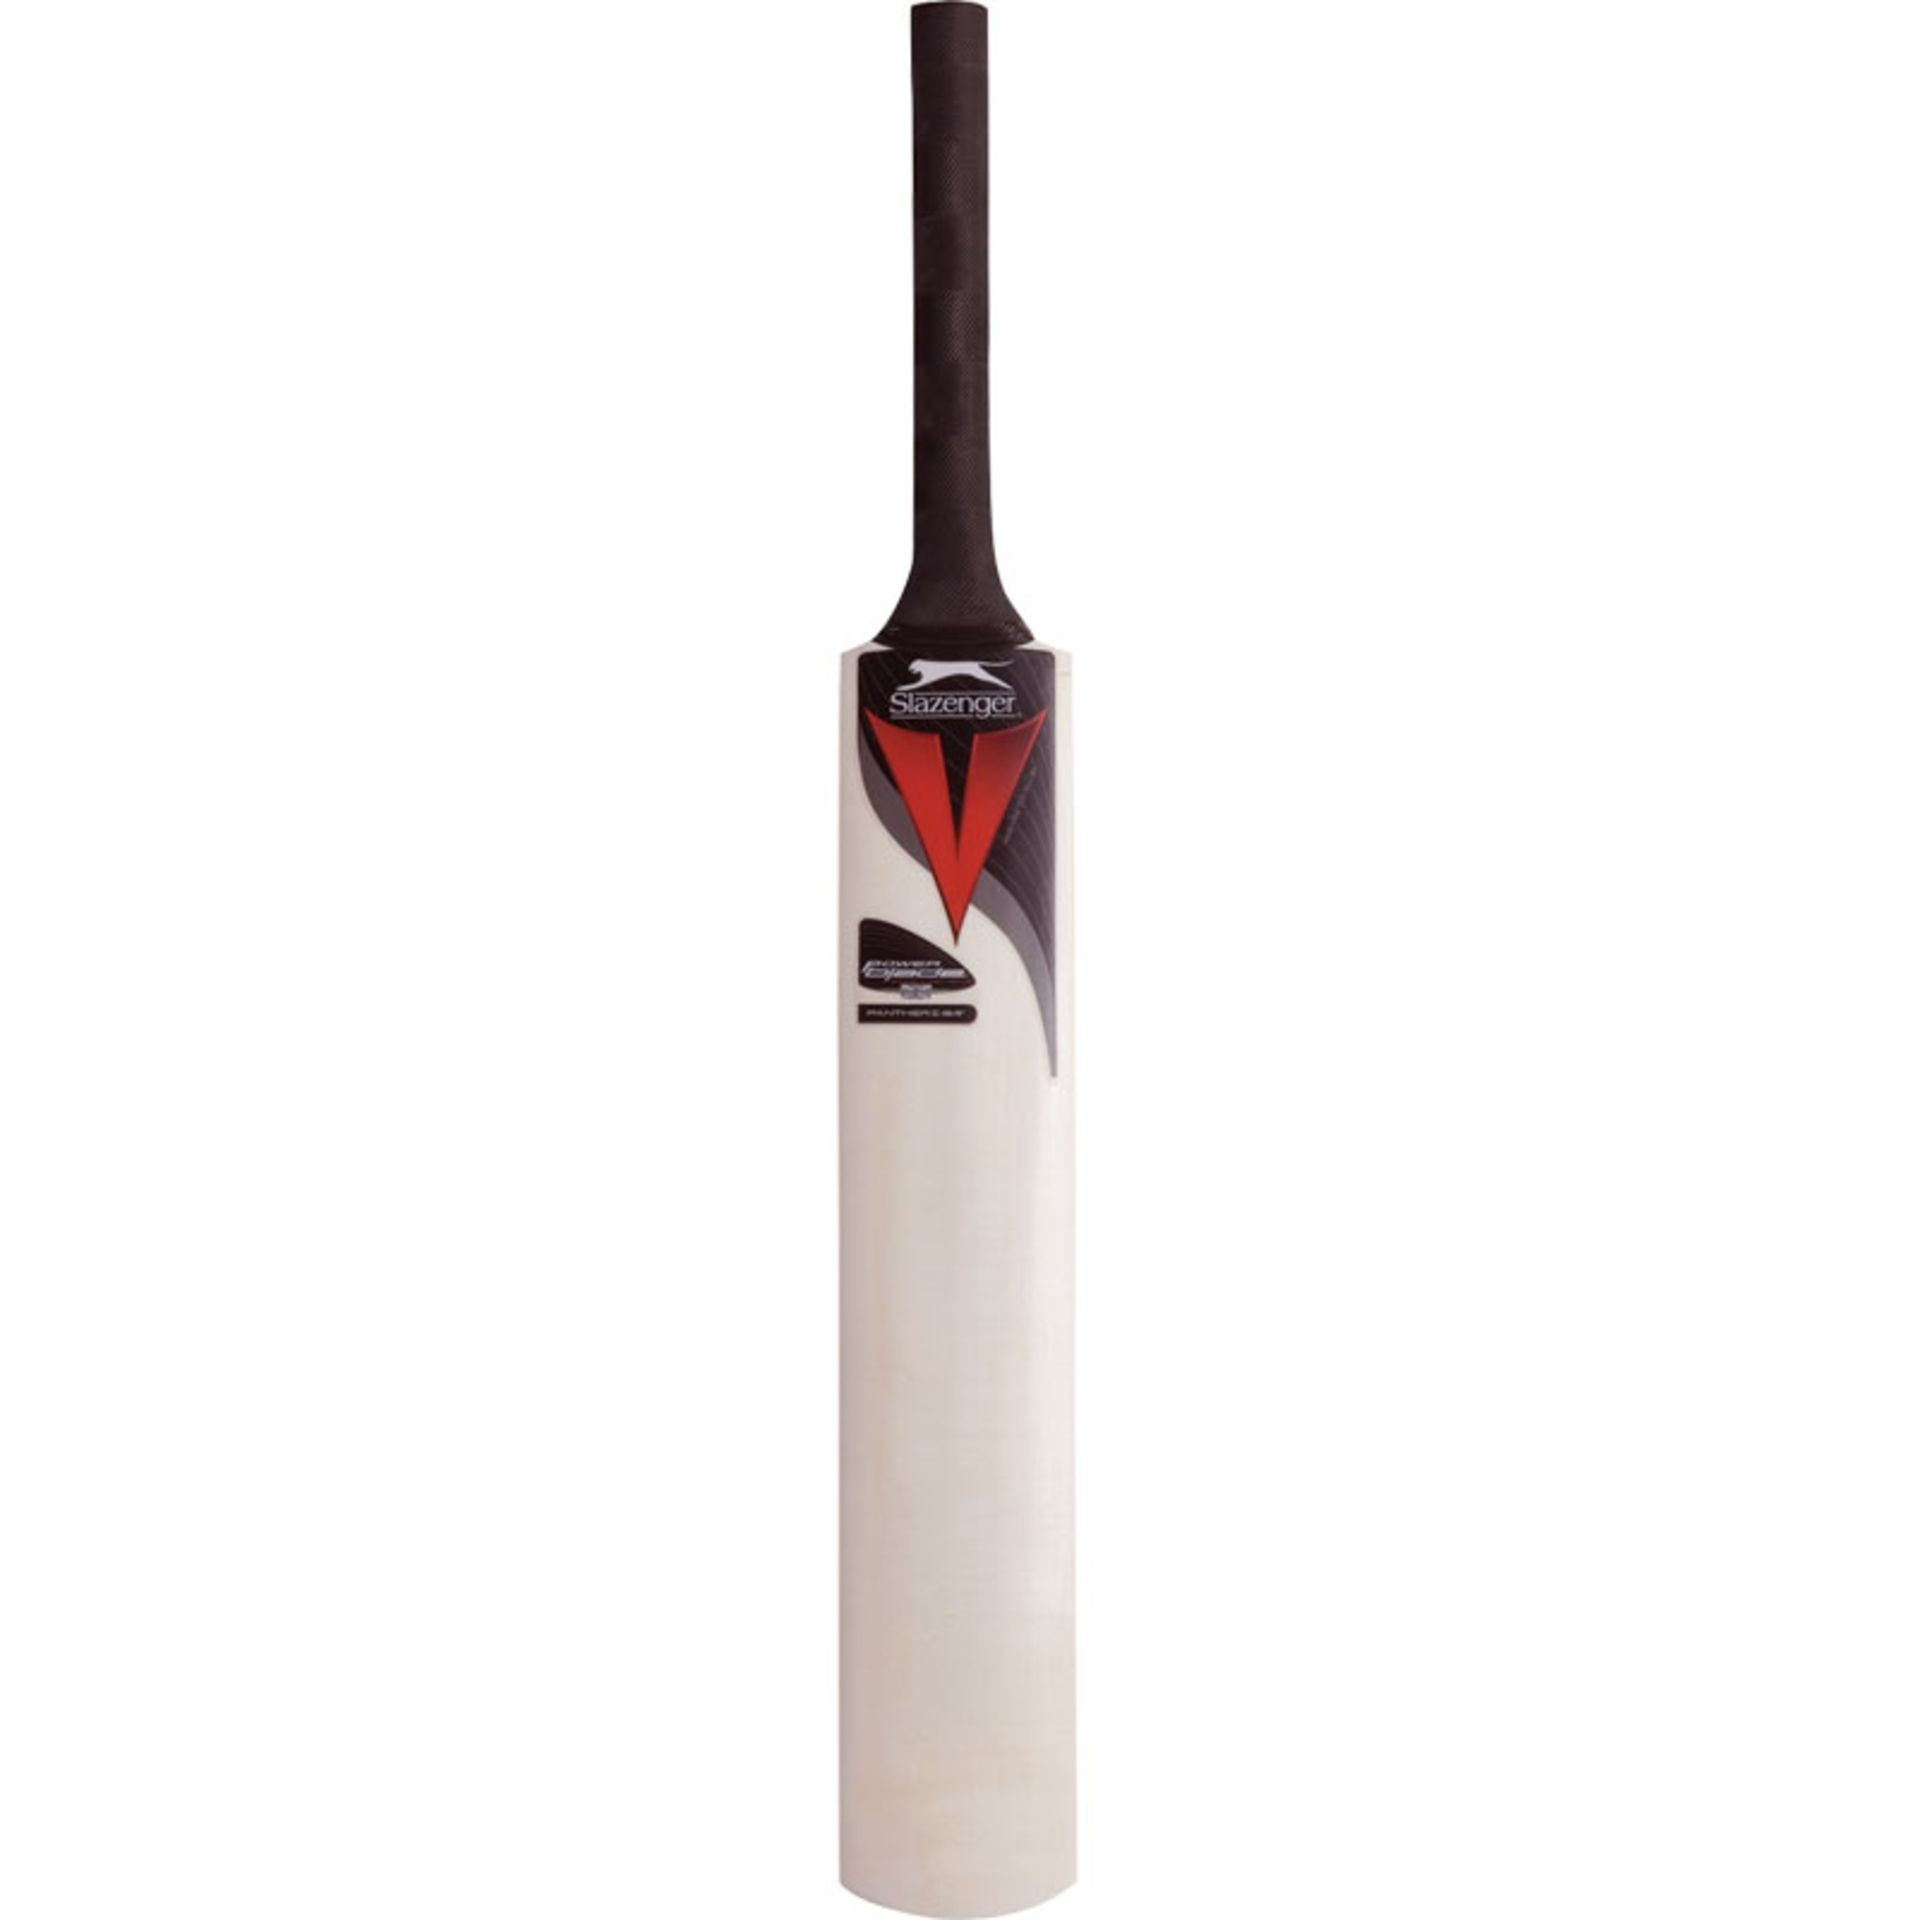 V Brand New Slazenger Power Blade Panther Junior Cricket Bat ISP £15 (Newitts)